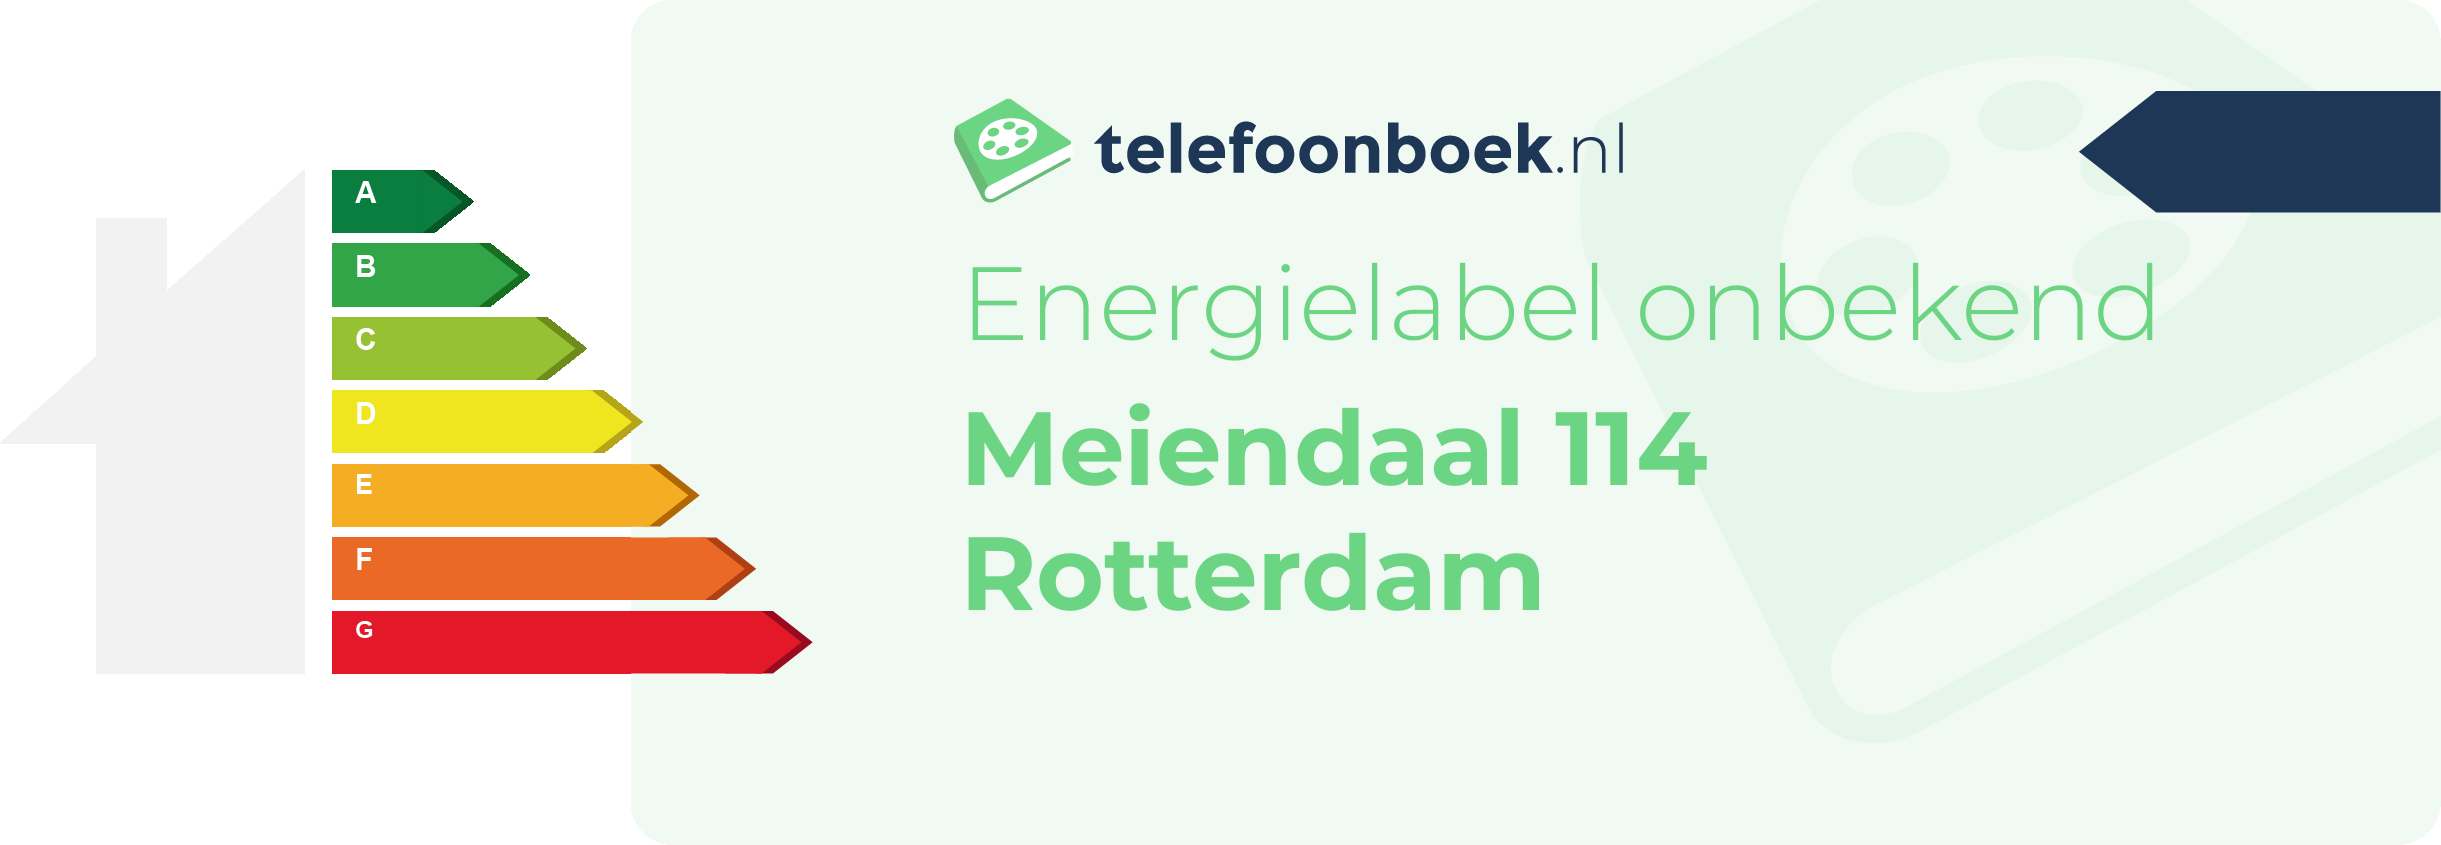 Energielabel Meiendaal 114 Rotterdam